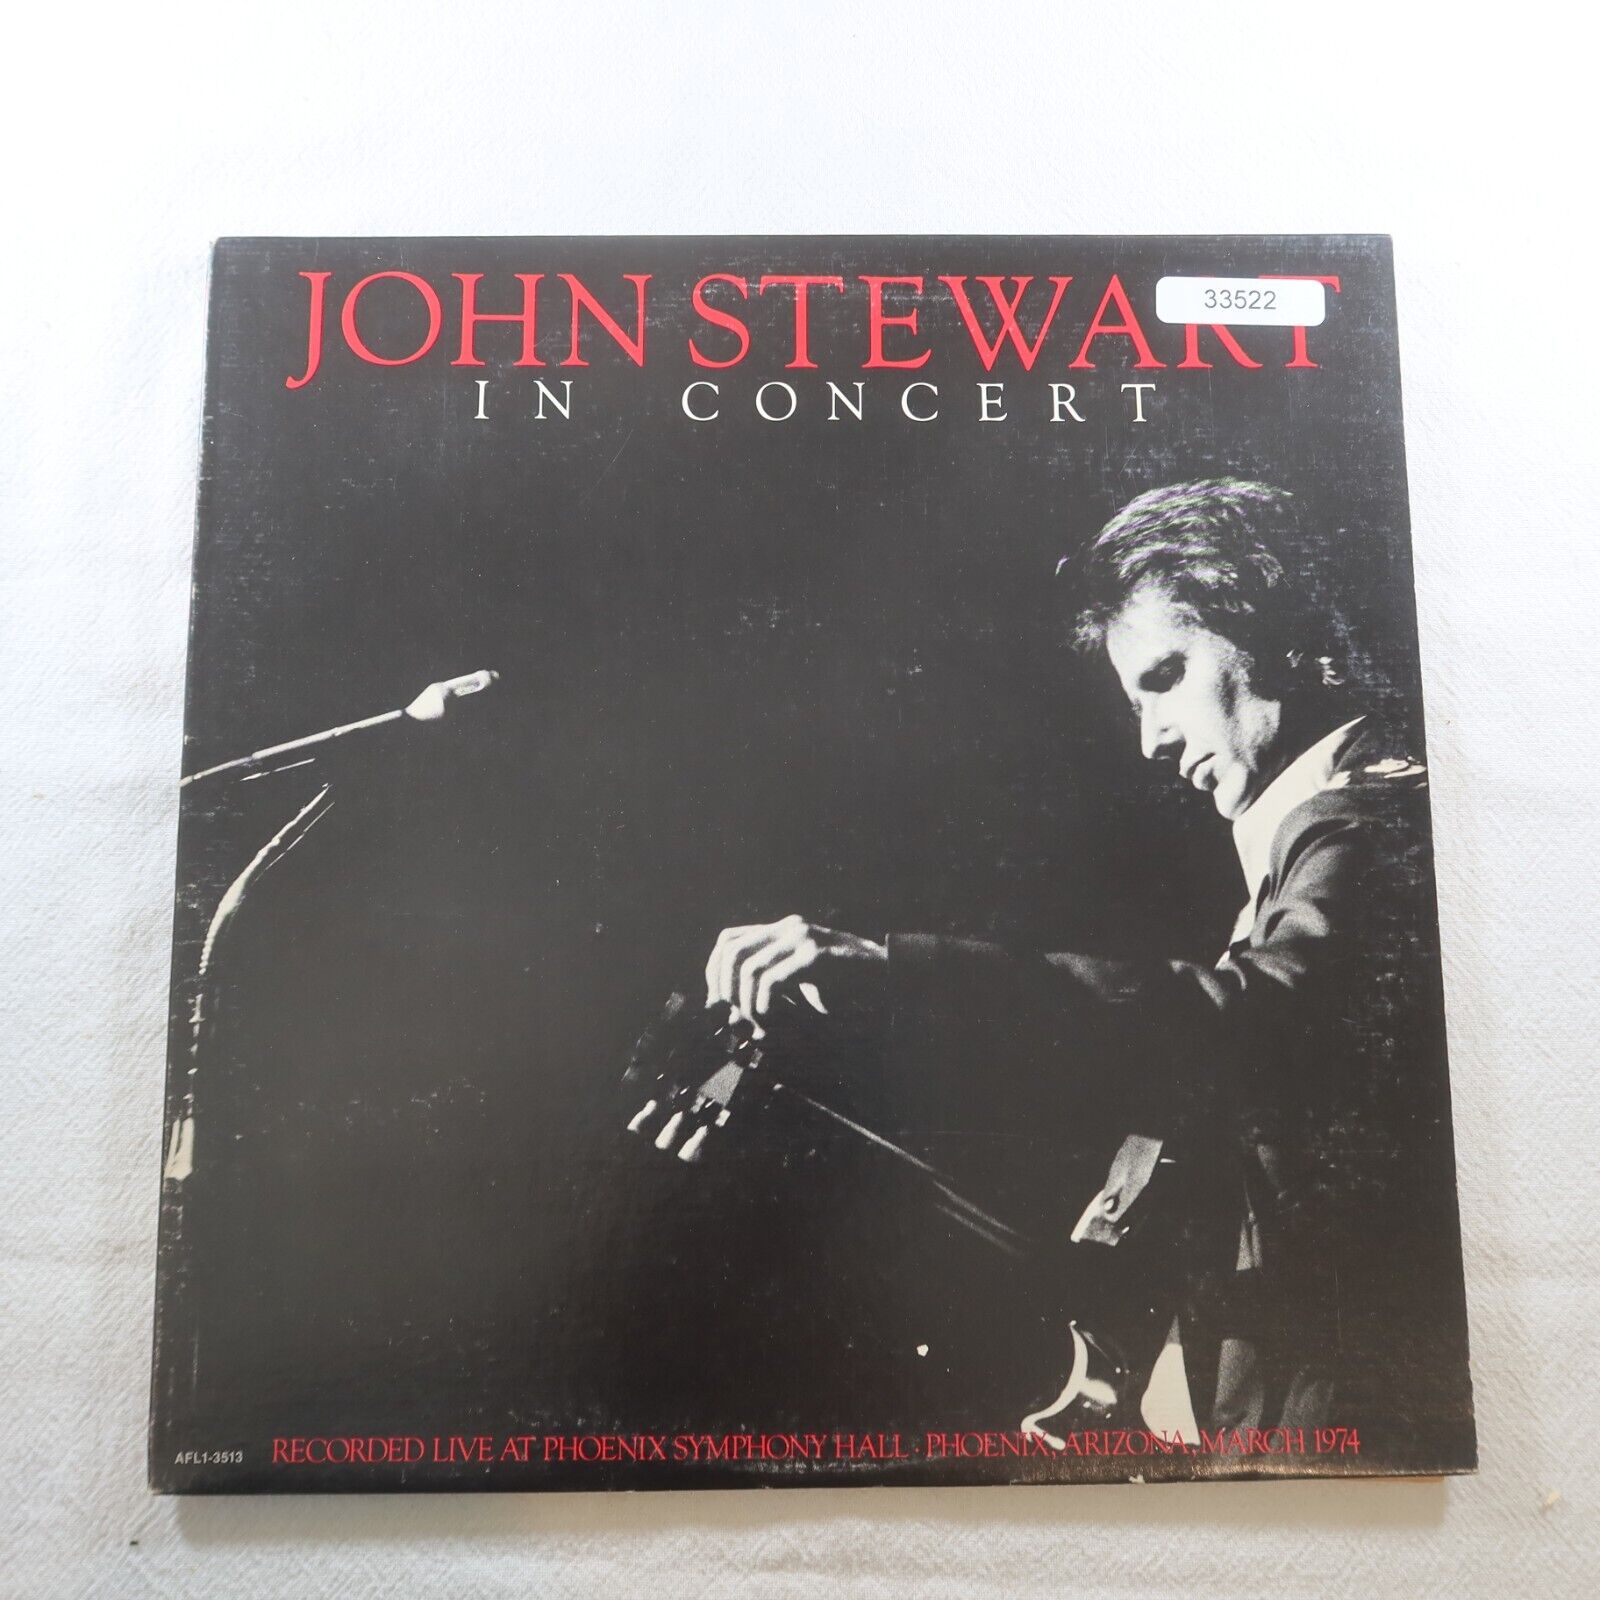 John Stewart John Stewart In Concert LP Vinyl Record Album